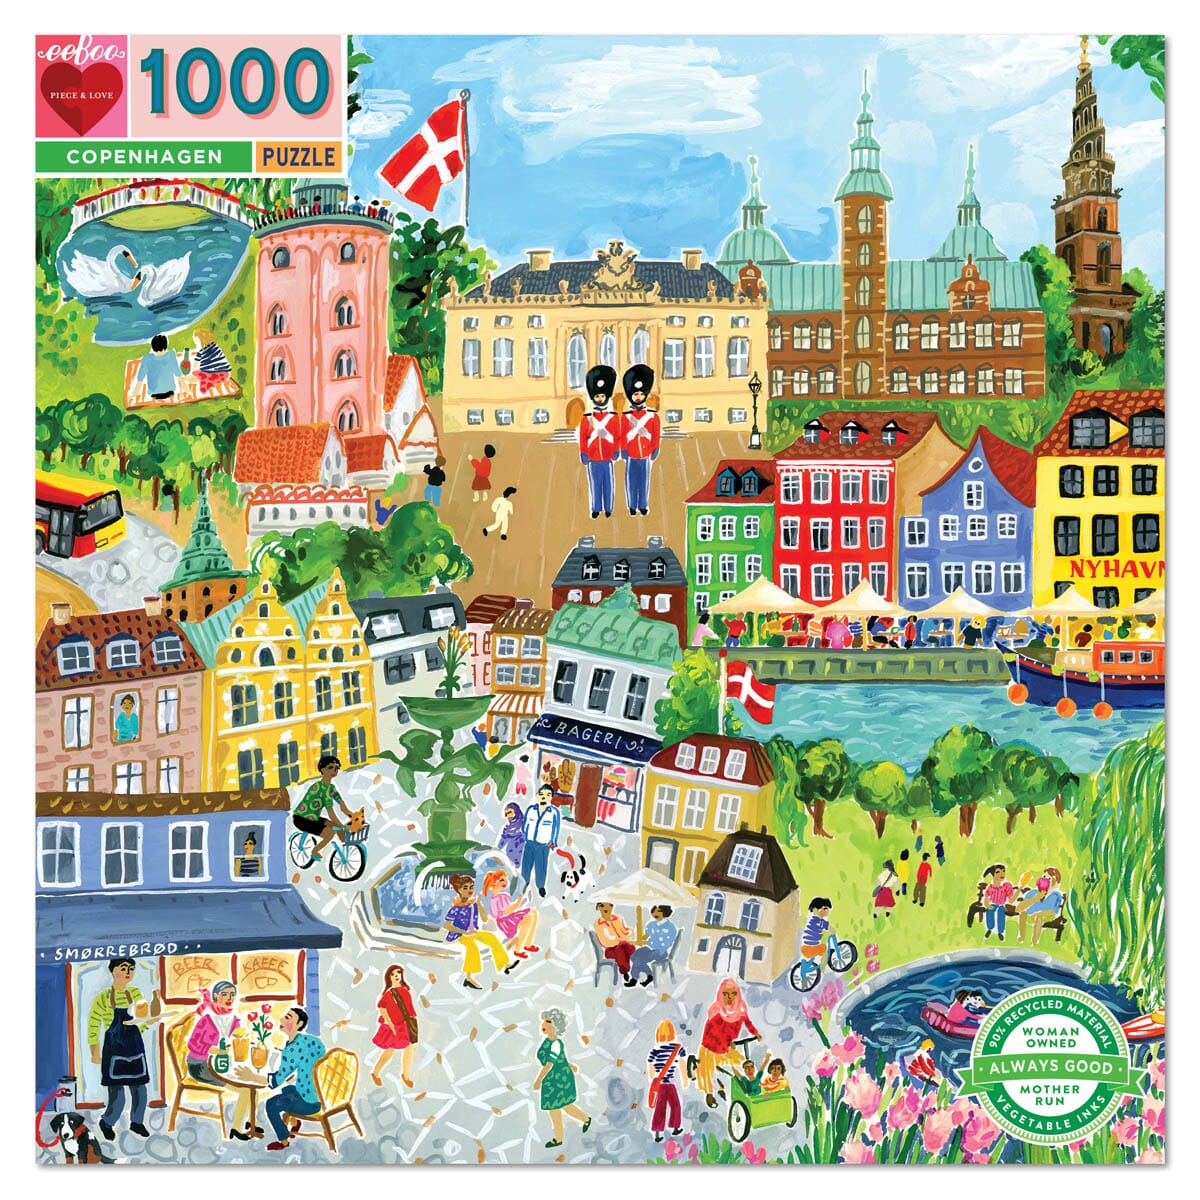 Copenhagen Puzzle (1000 piece)